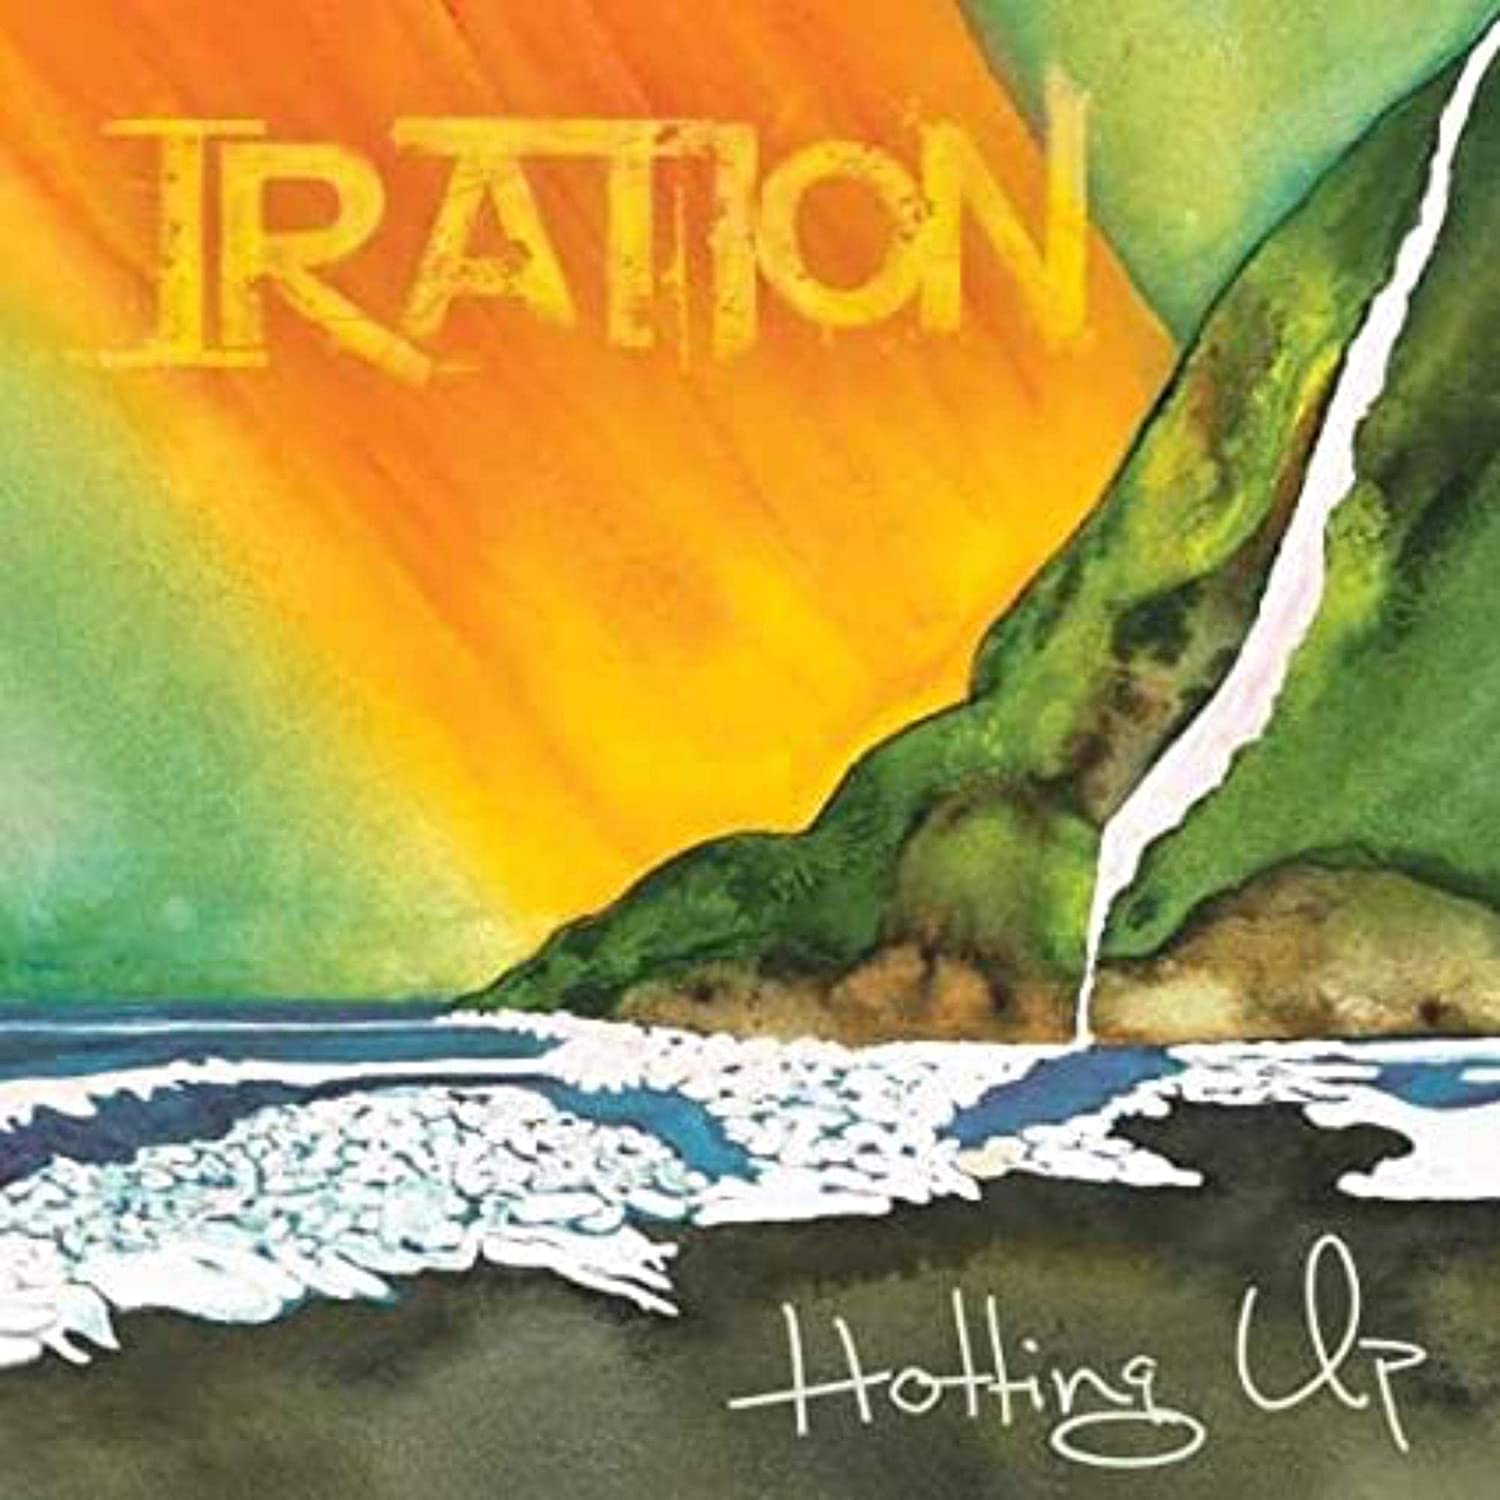 IRATION - HOTTING UP Vinyl LP